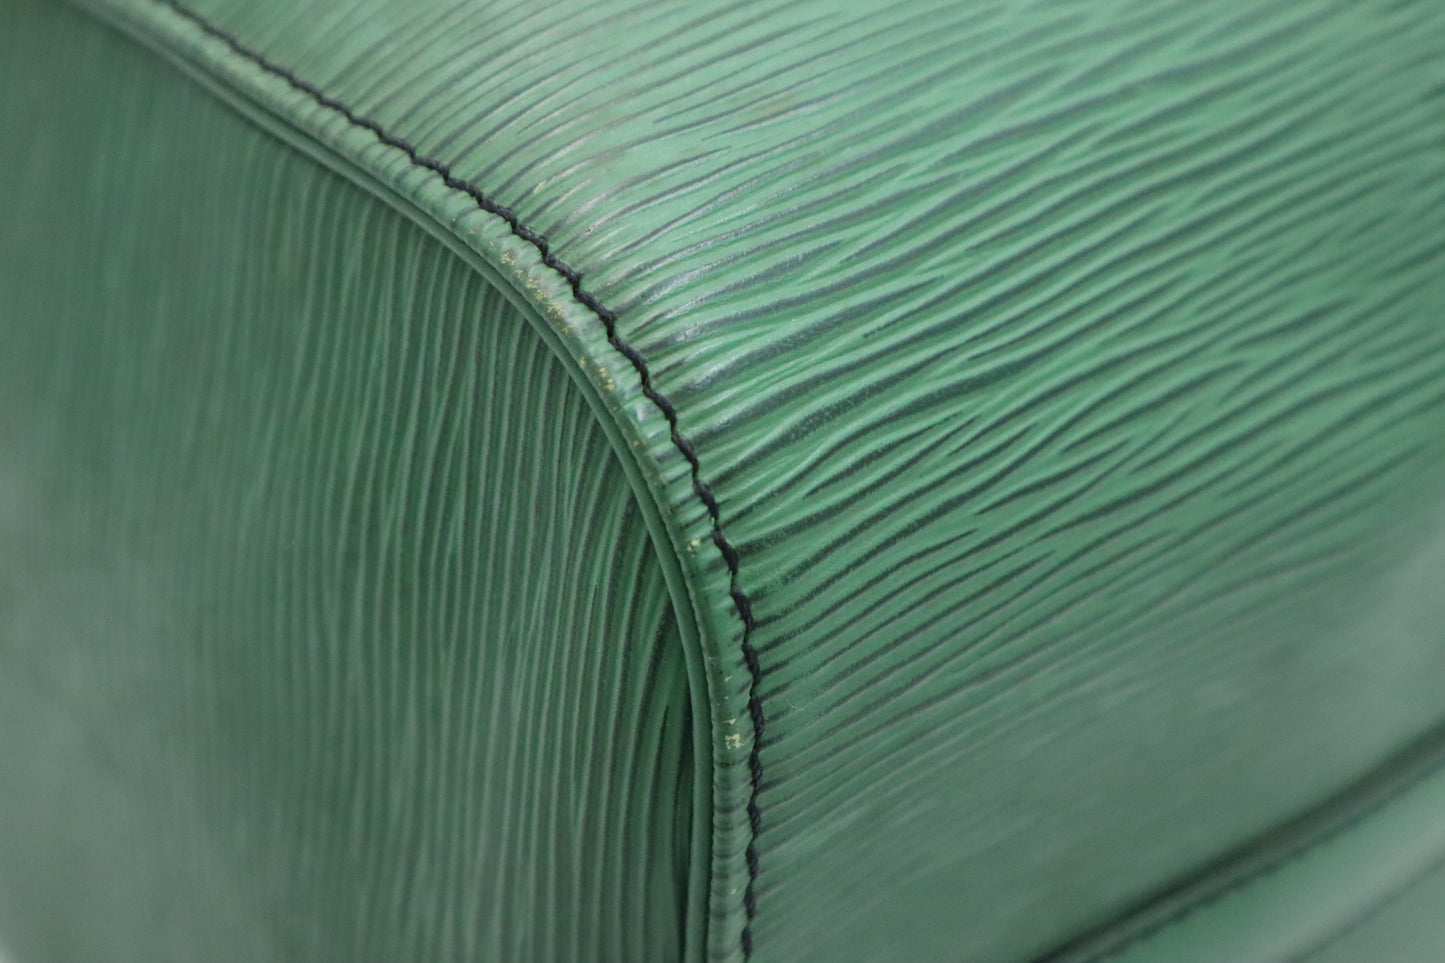 Louis Vuitton Speedy 30 in Green Epi Leather